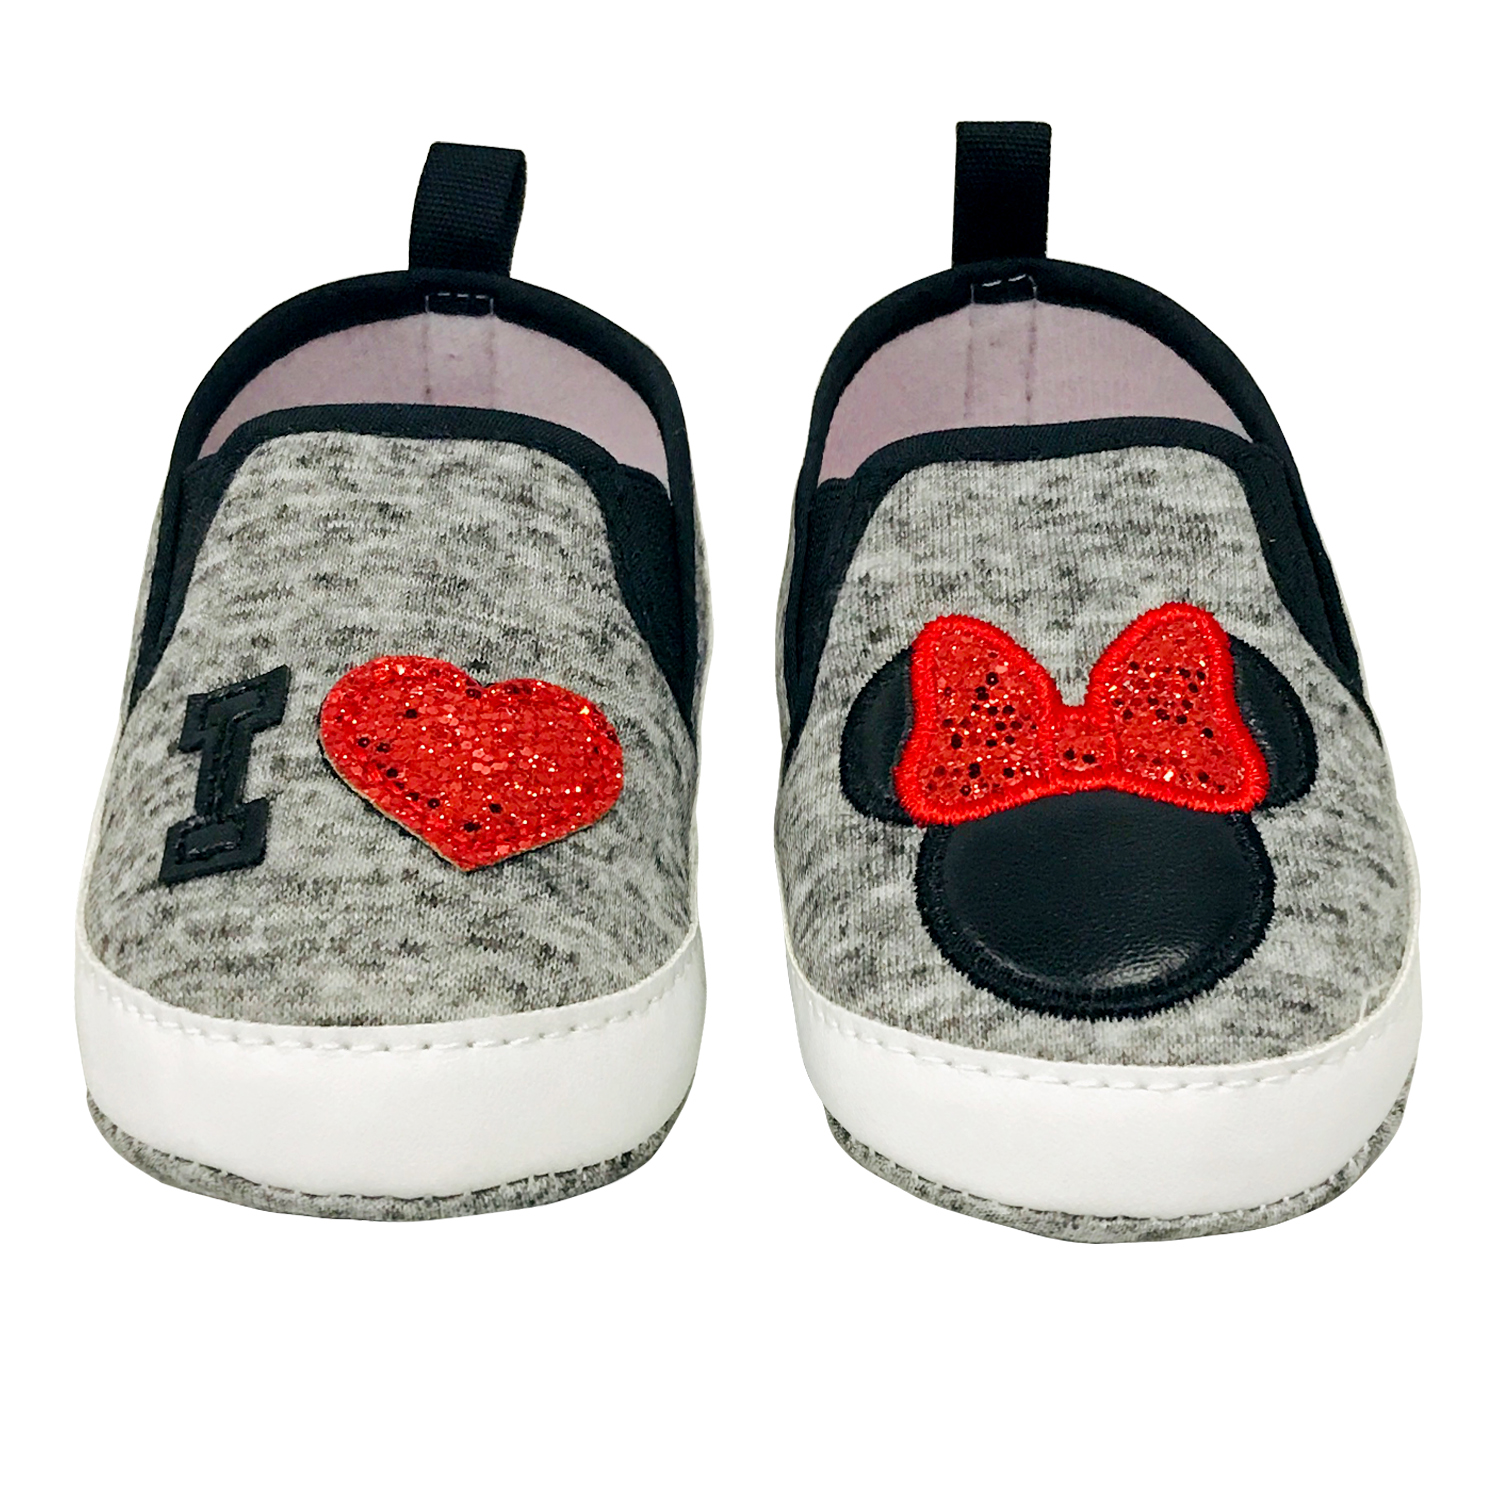 Disney Minnie Mouse Infant Prewalker Soft Sole Slip-on Shoes - Size 9-12 Months - image 1 of 6